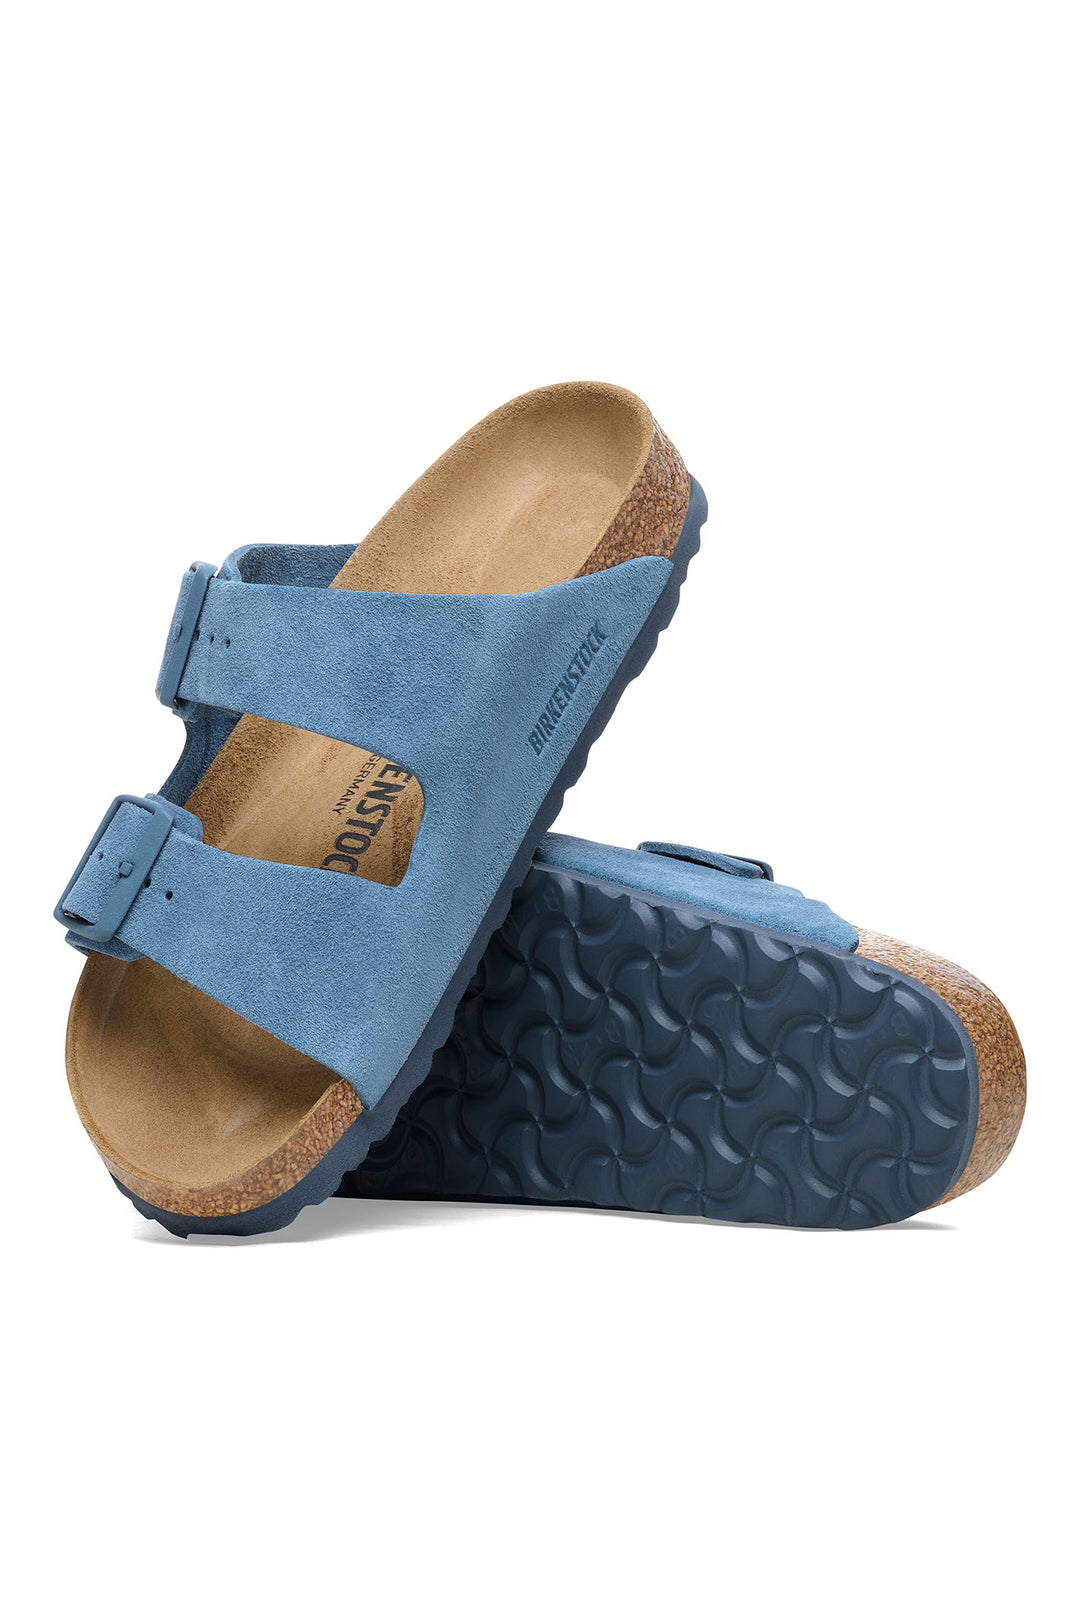 Birkenstock Arizona 1026820 Elemental Blue Suede Narrow Fit Sandal - Shirley Allum Boutique